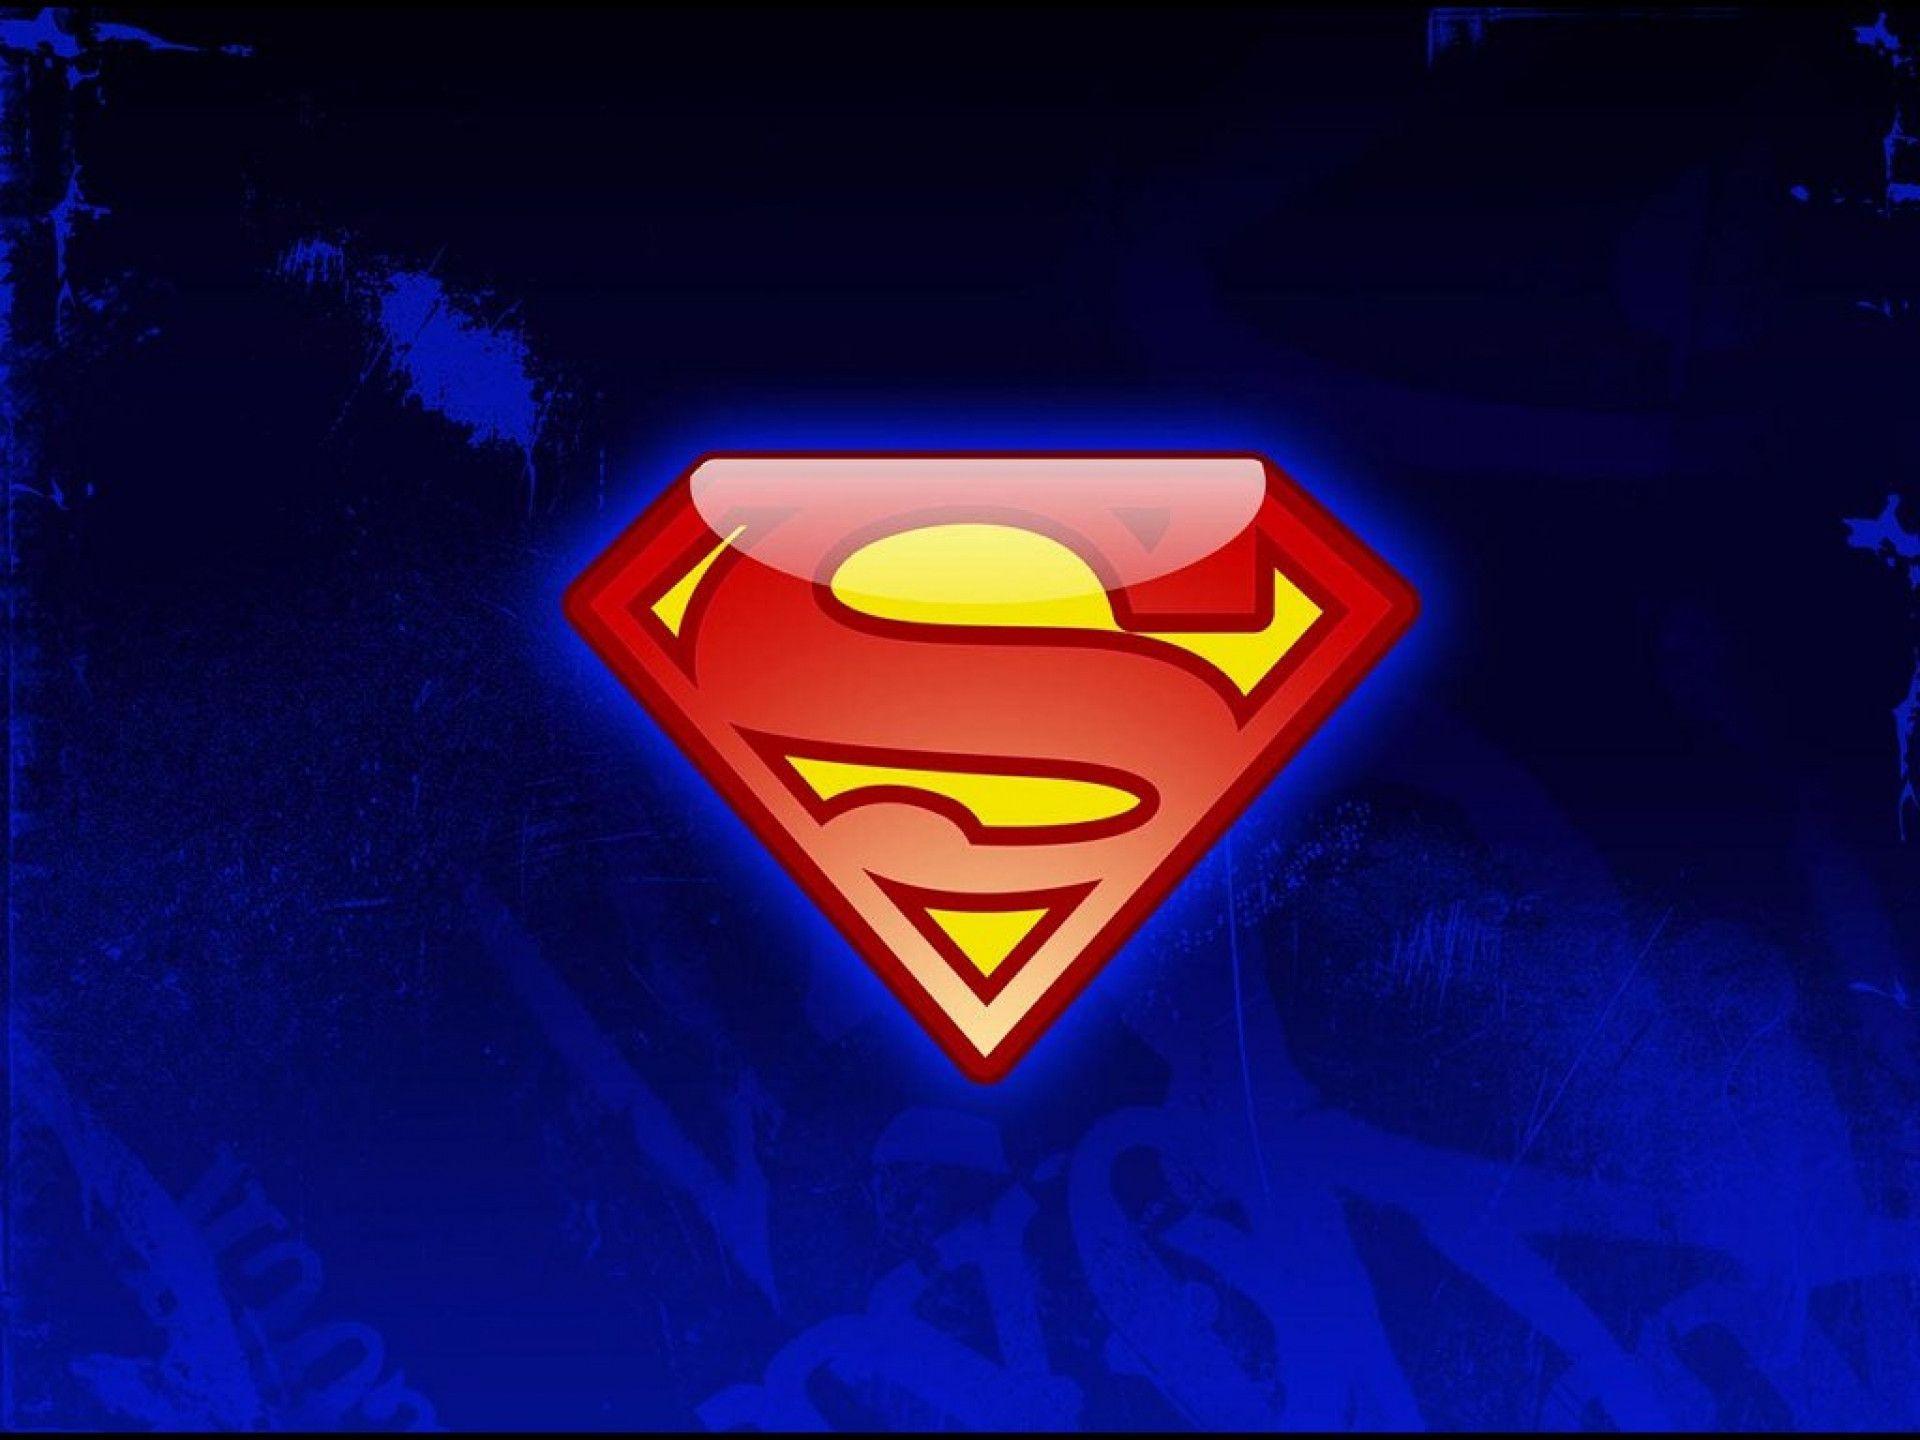 Fondos de pantalla de Superman - FondosMil